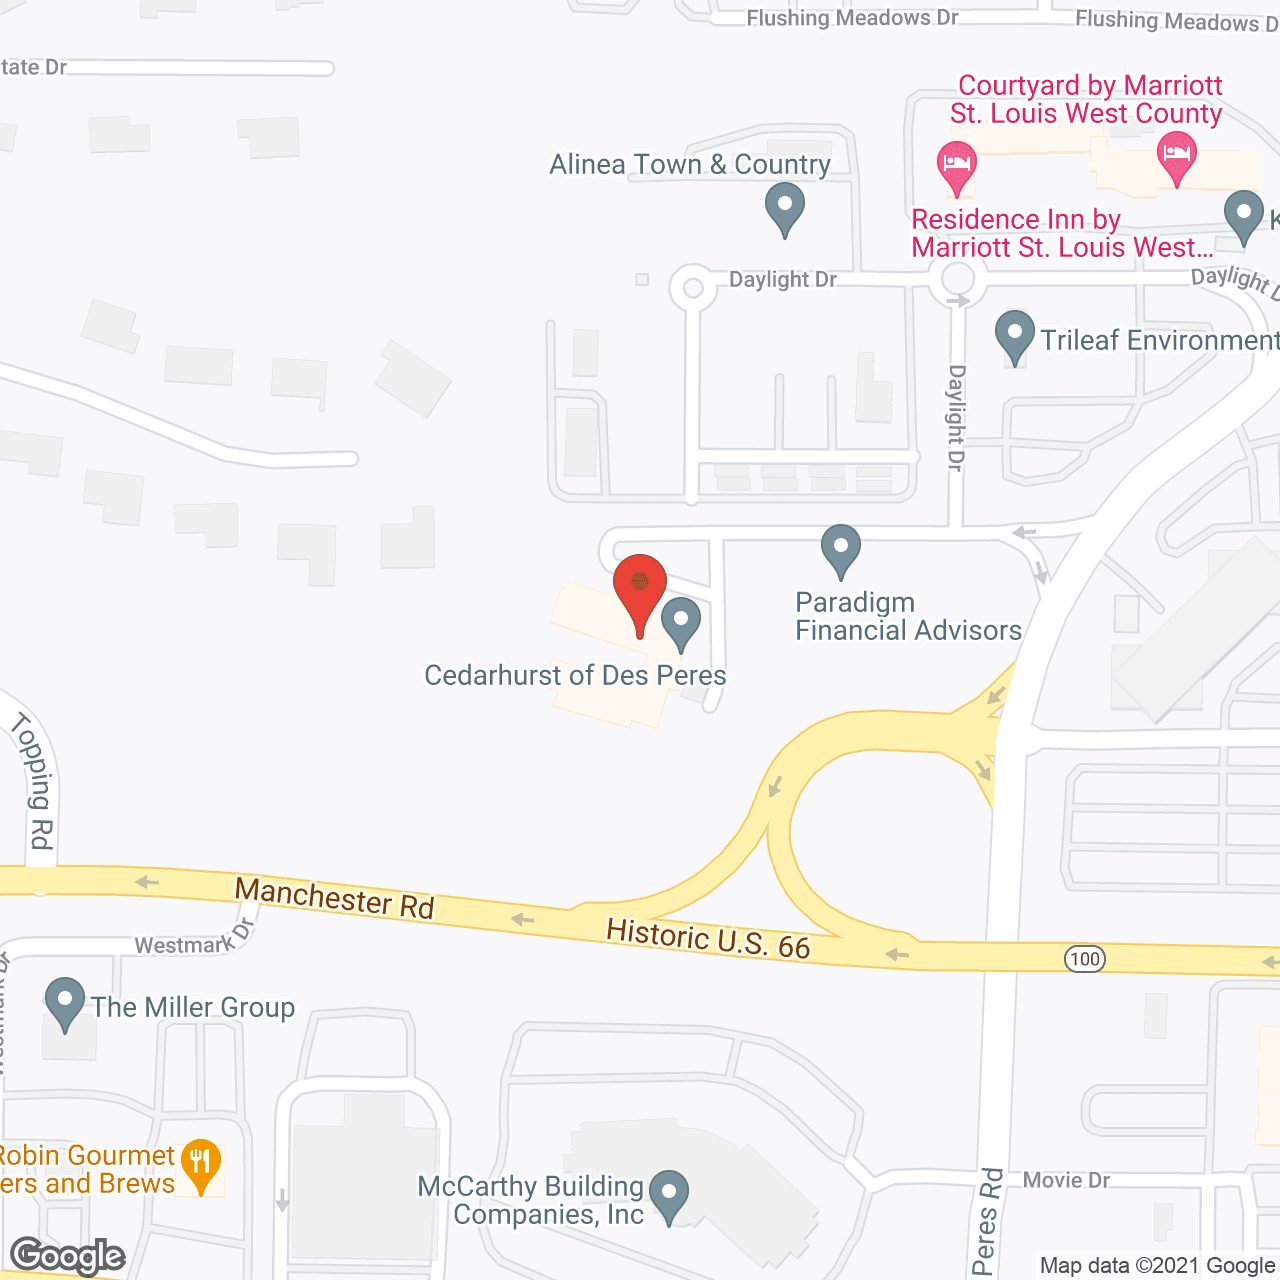 Cedarhurst of Des Peres in google map